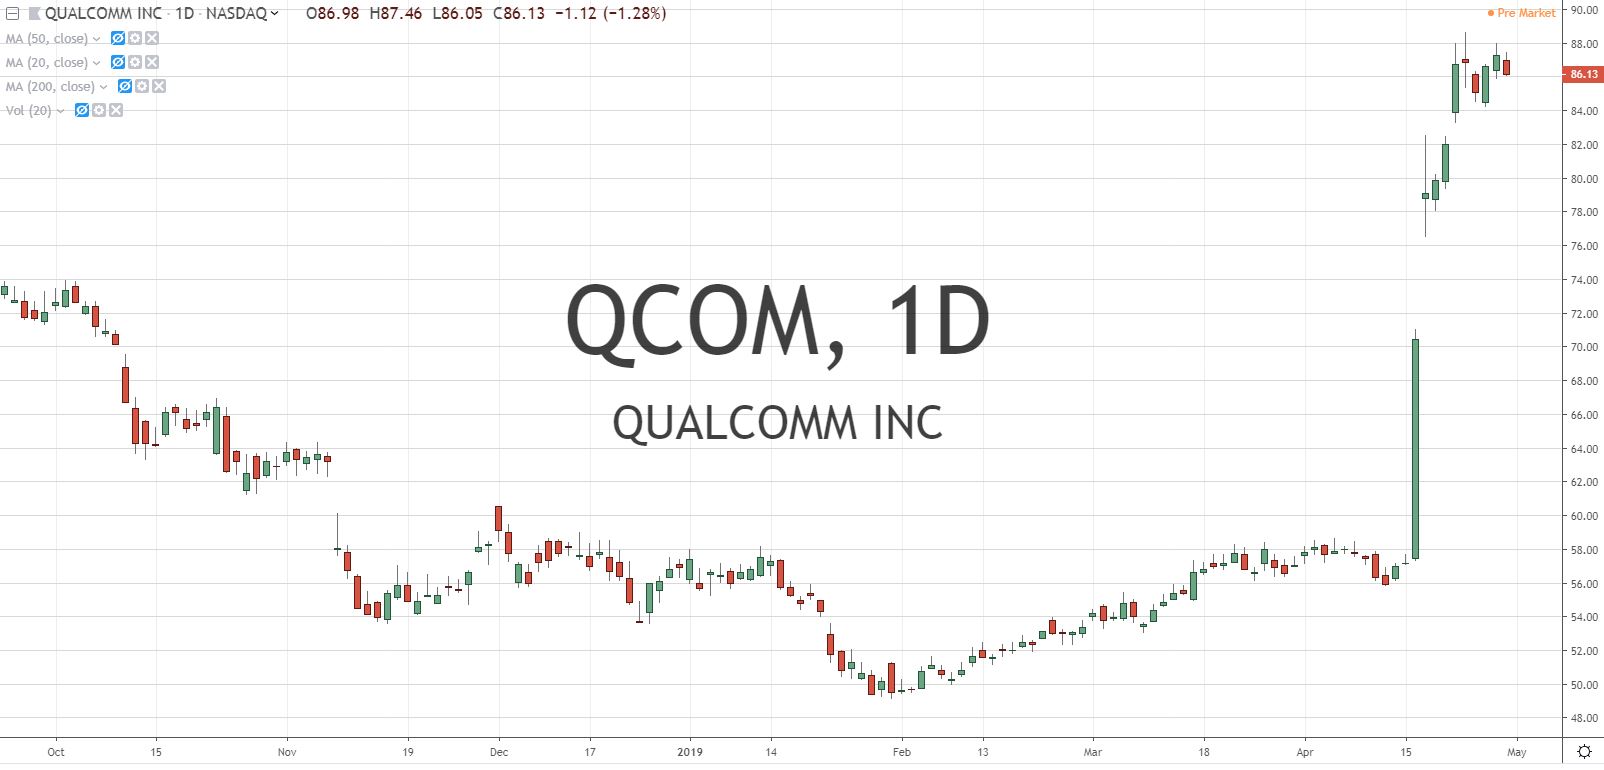 Qualcomm Inc QCOM Stock Chart 5.1.19 Before Earnings